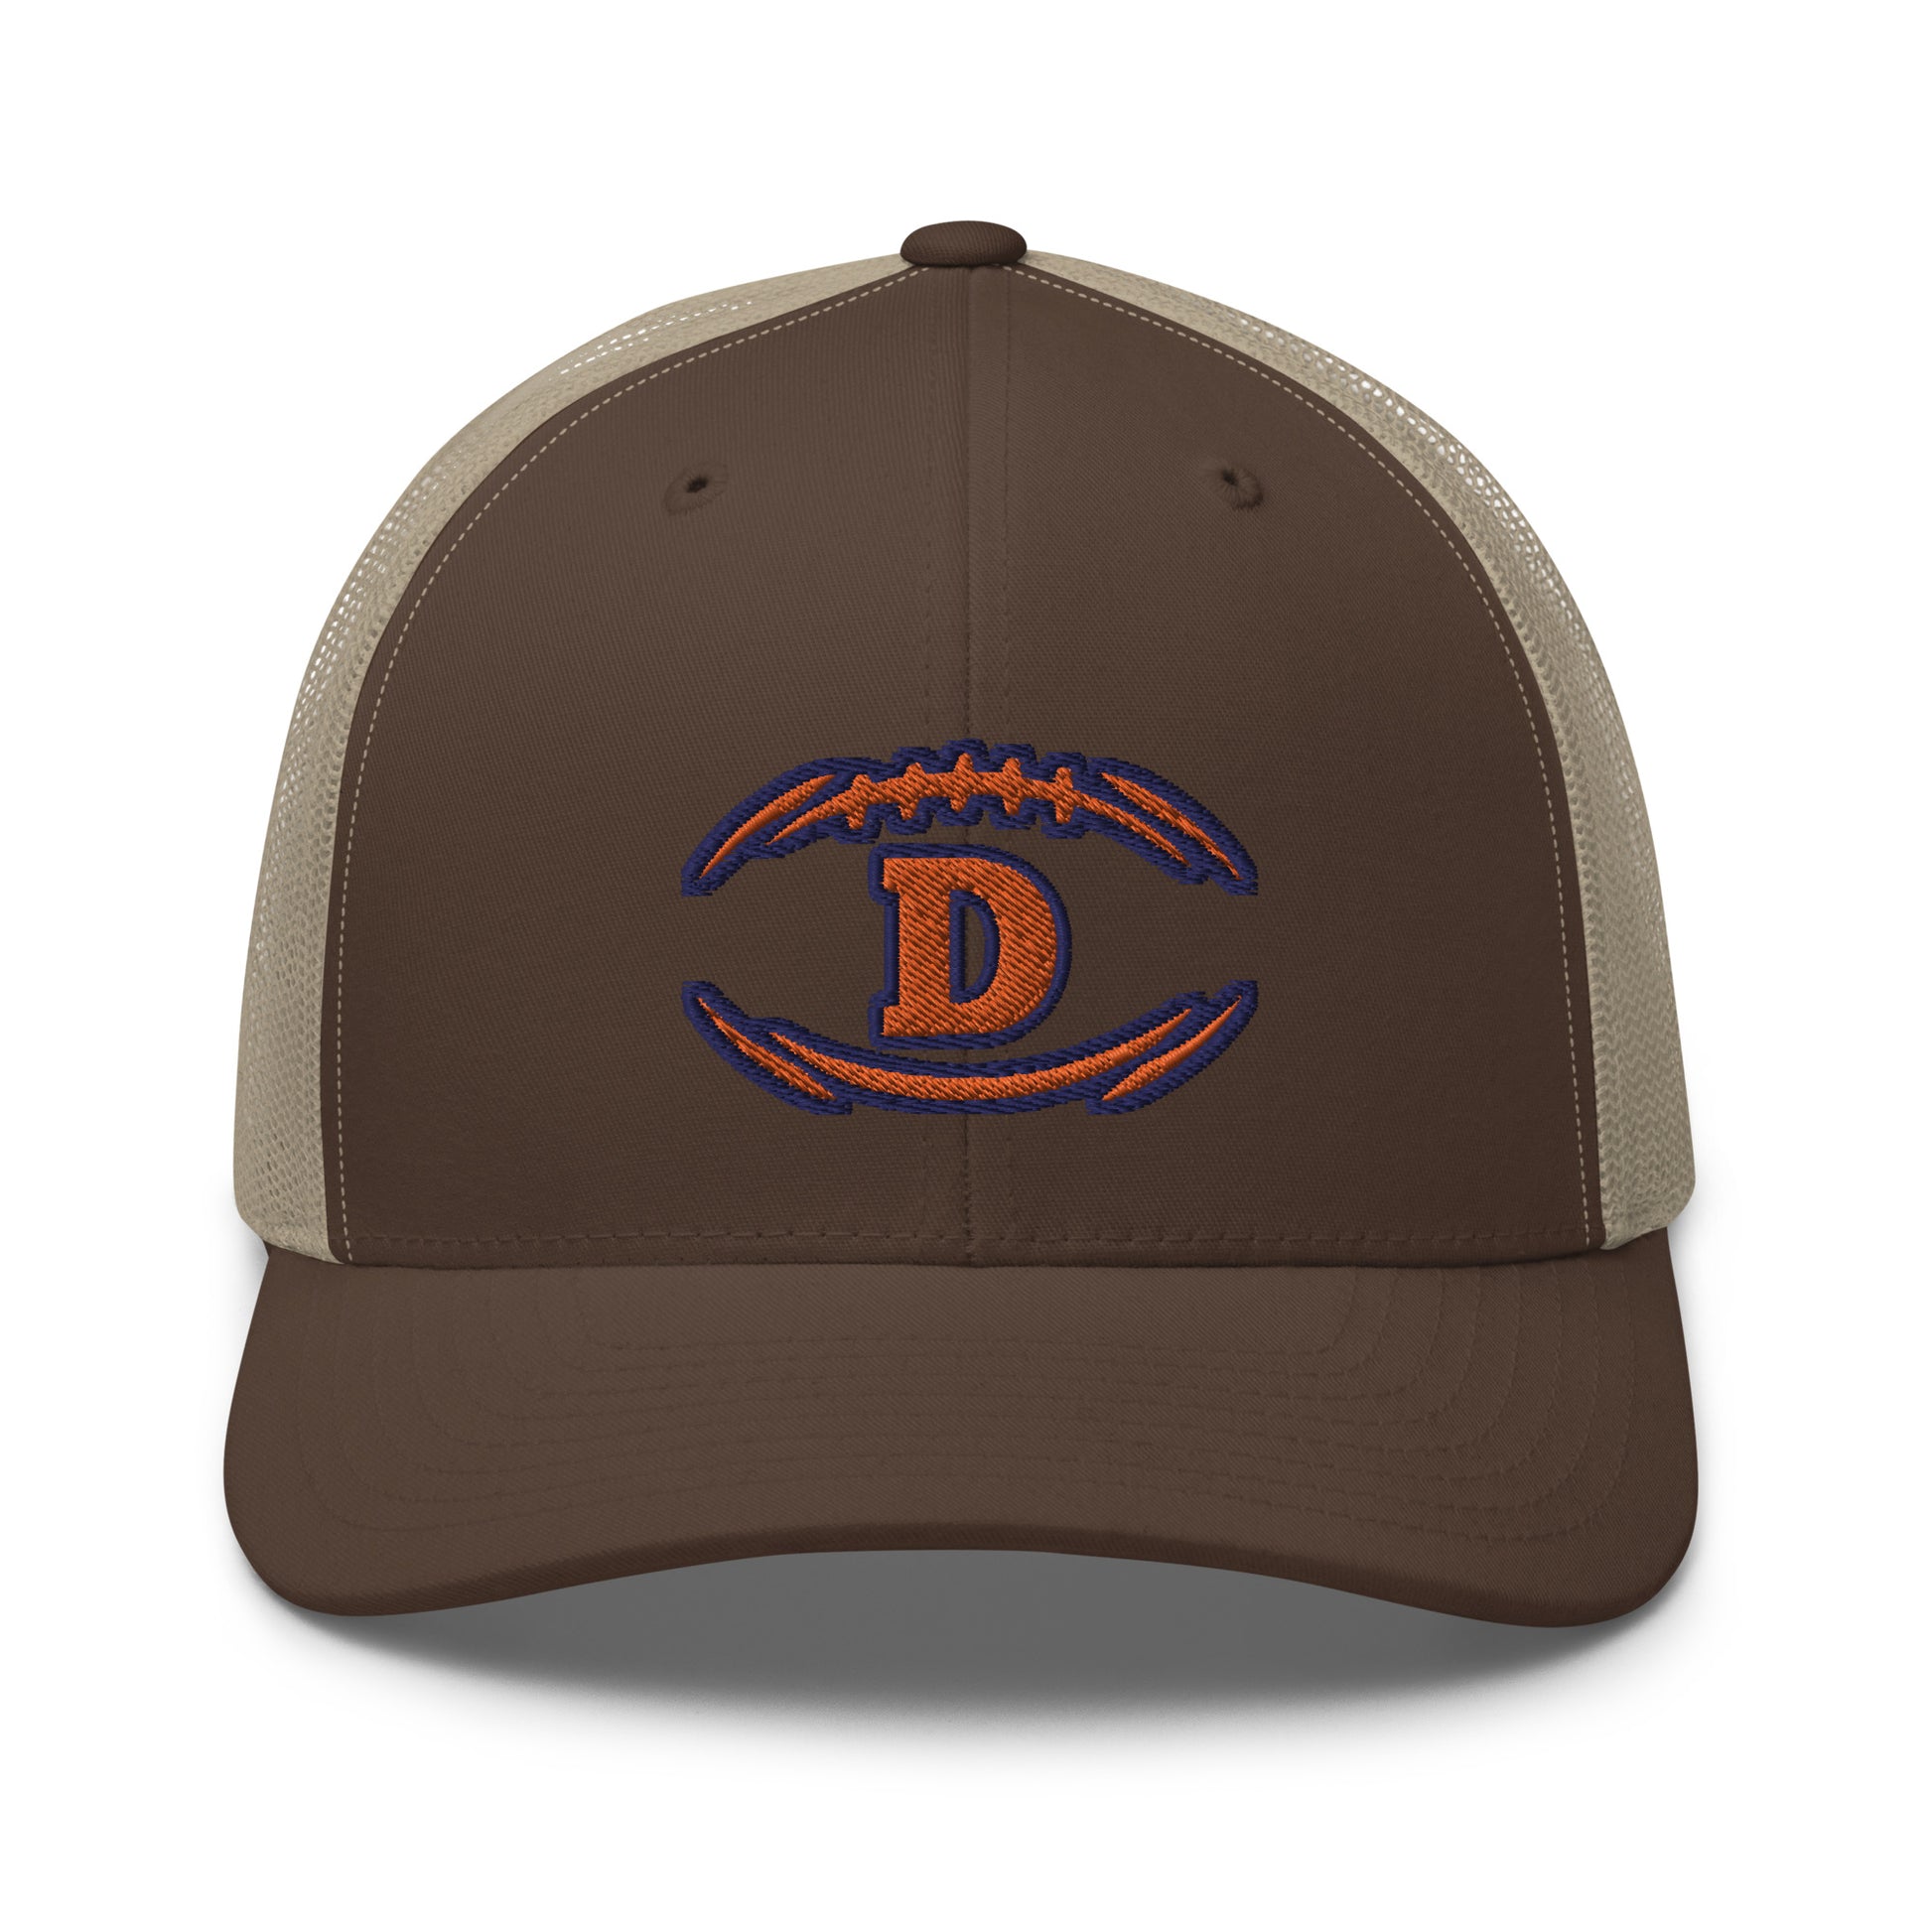 Broncos Hat / Denver Broncos Hat / D Hat / Trucker Cap